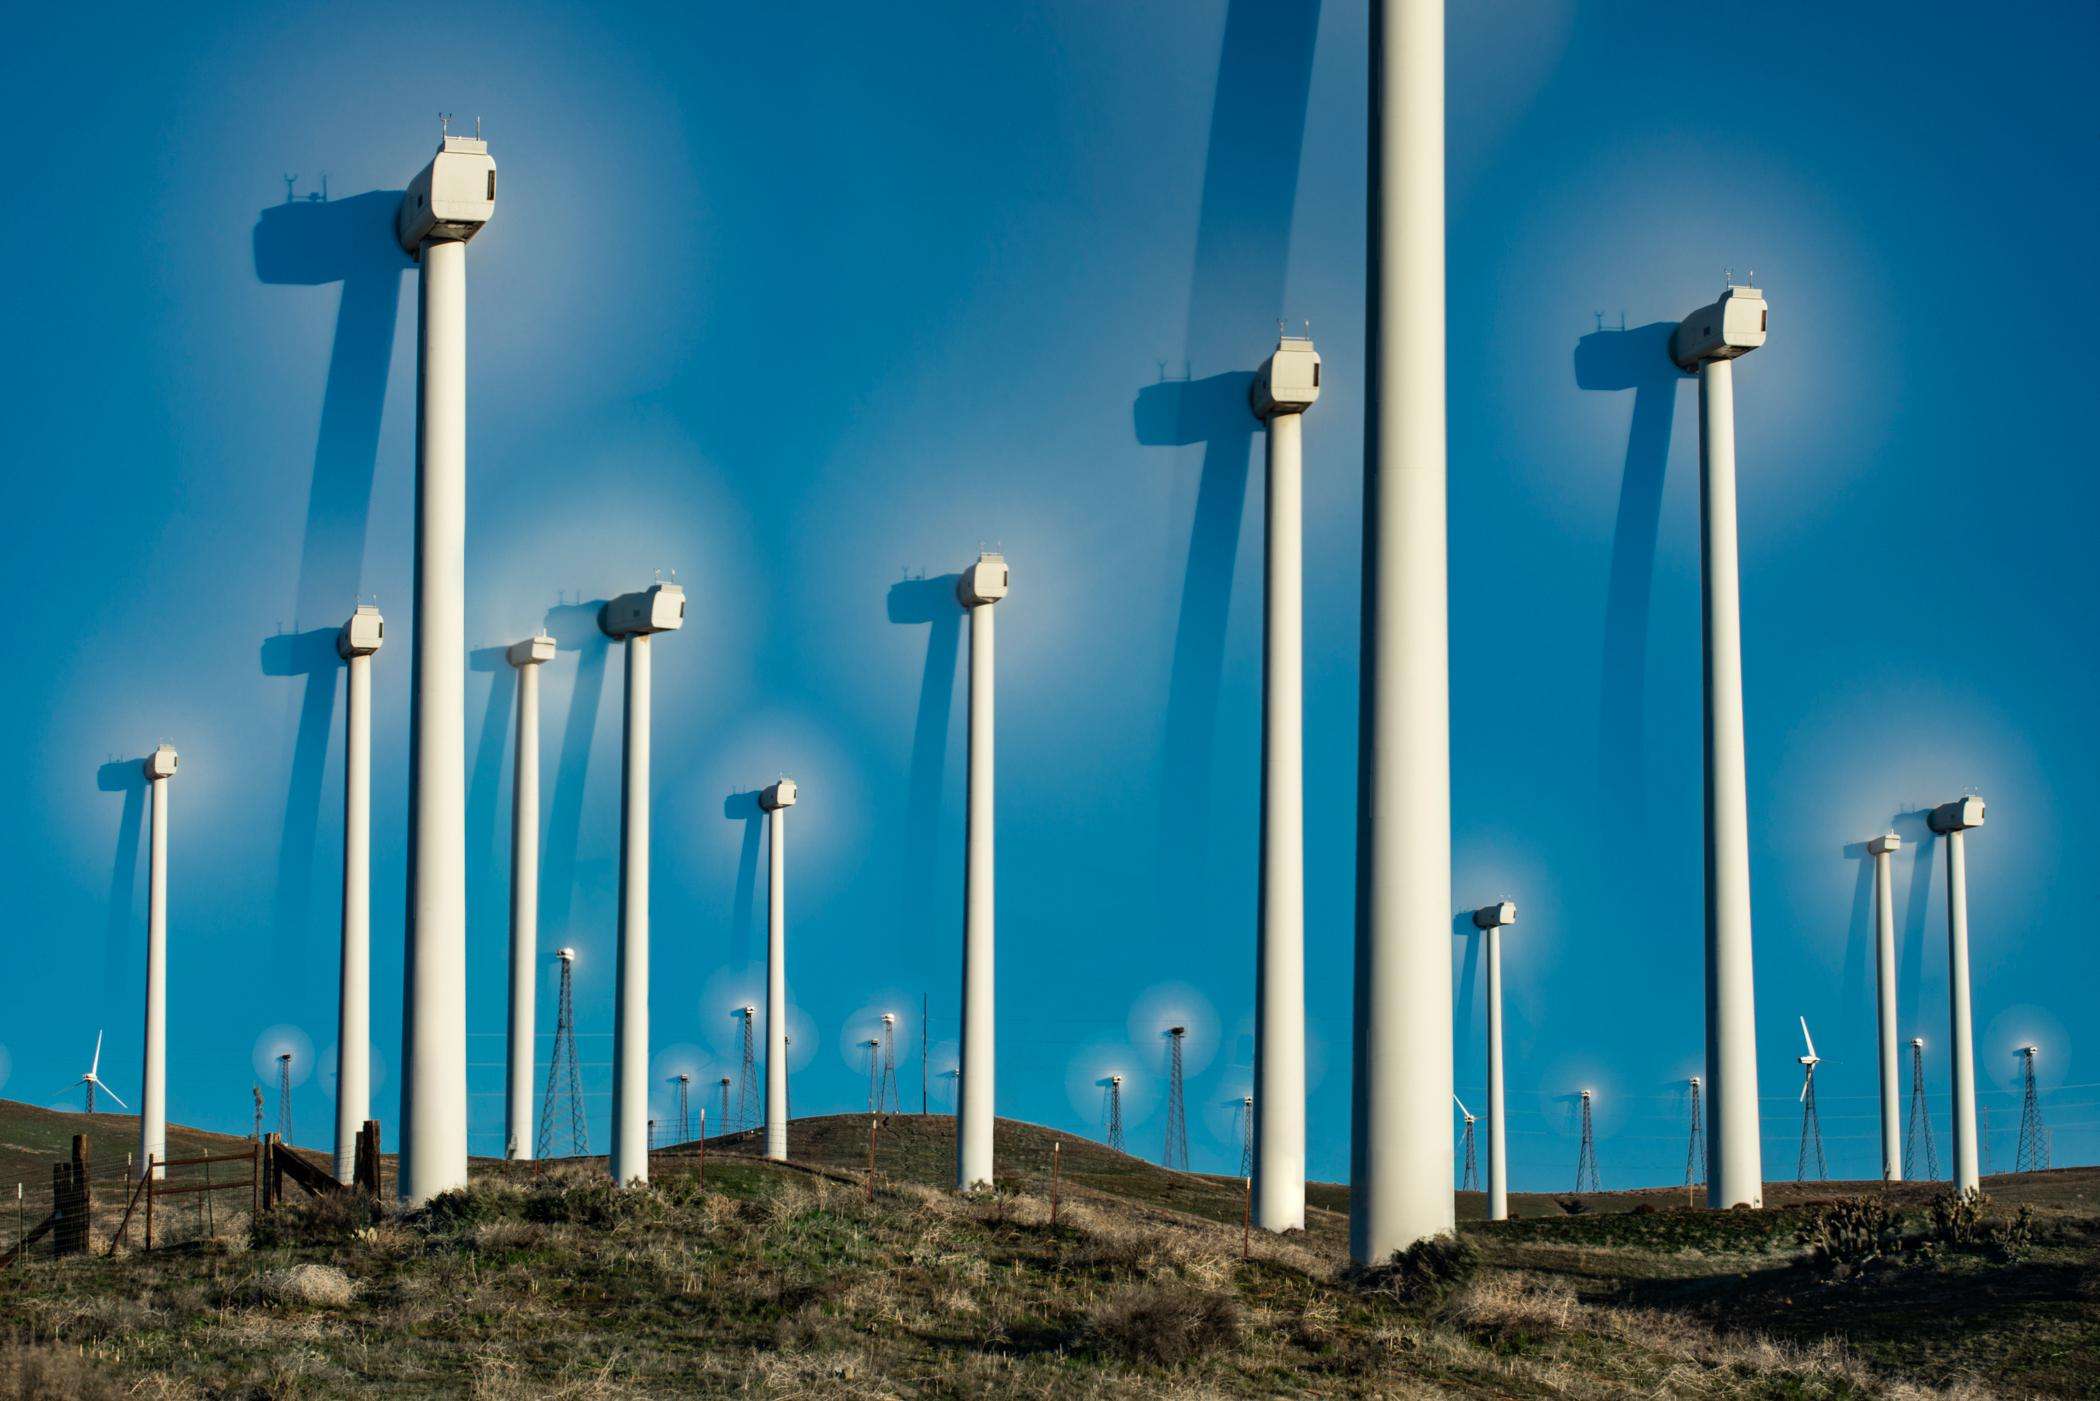 image showing Long exposure photo of wind turbines